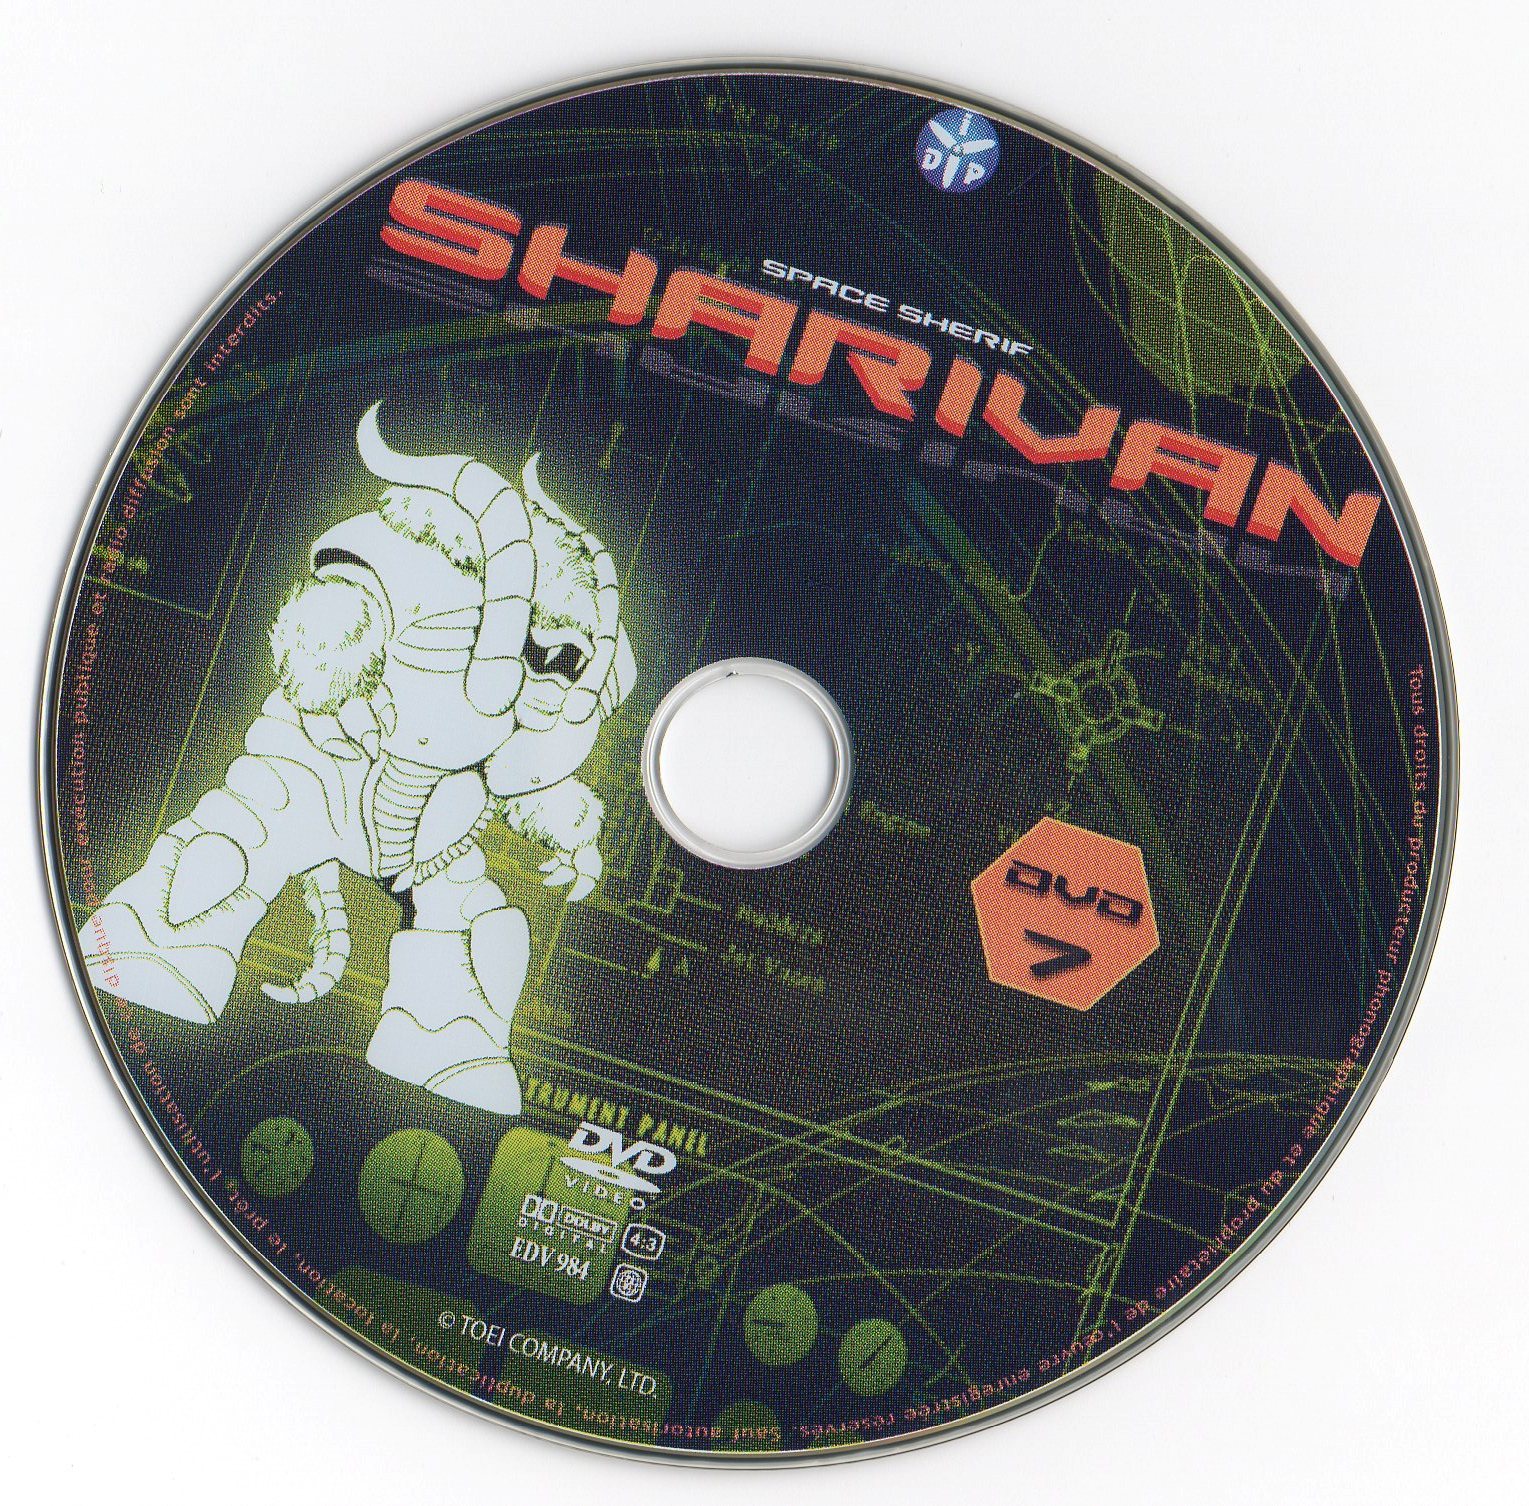 Sharivan DISC 07